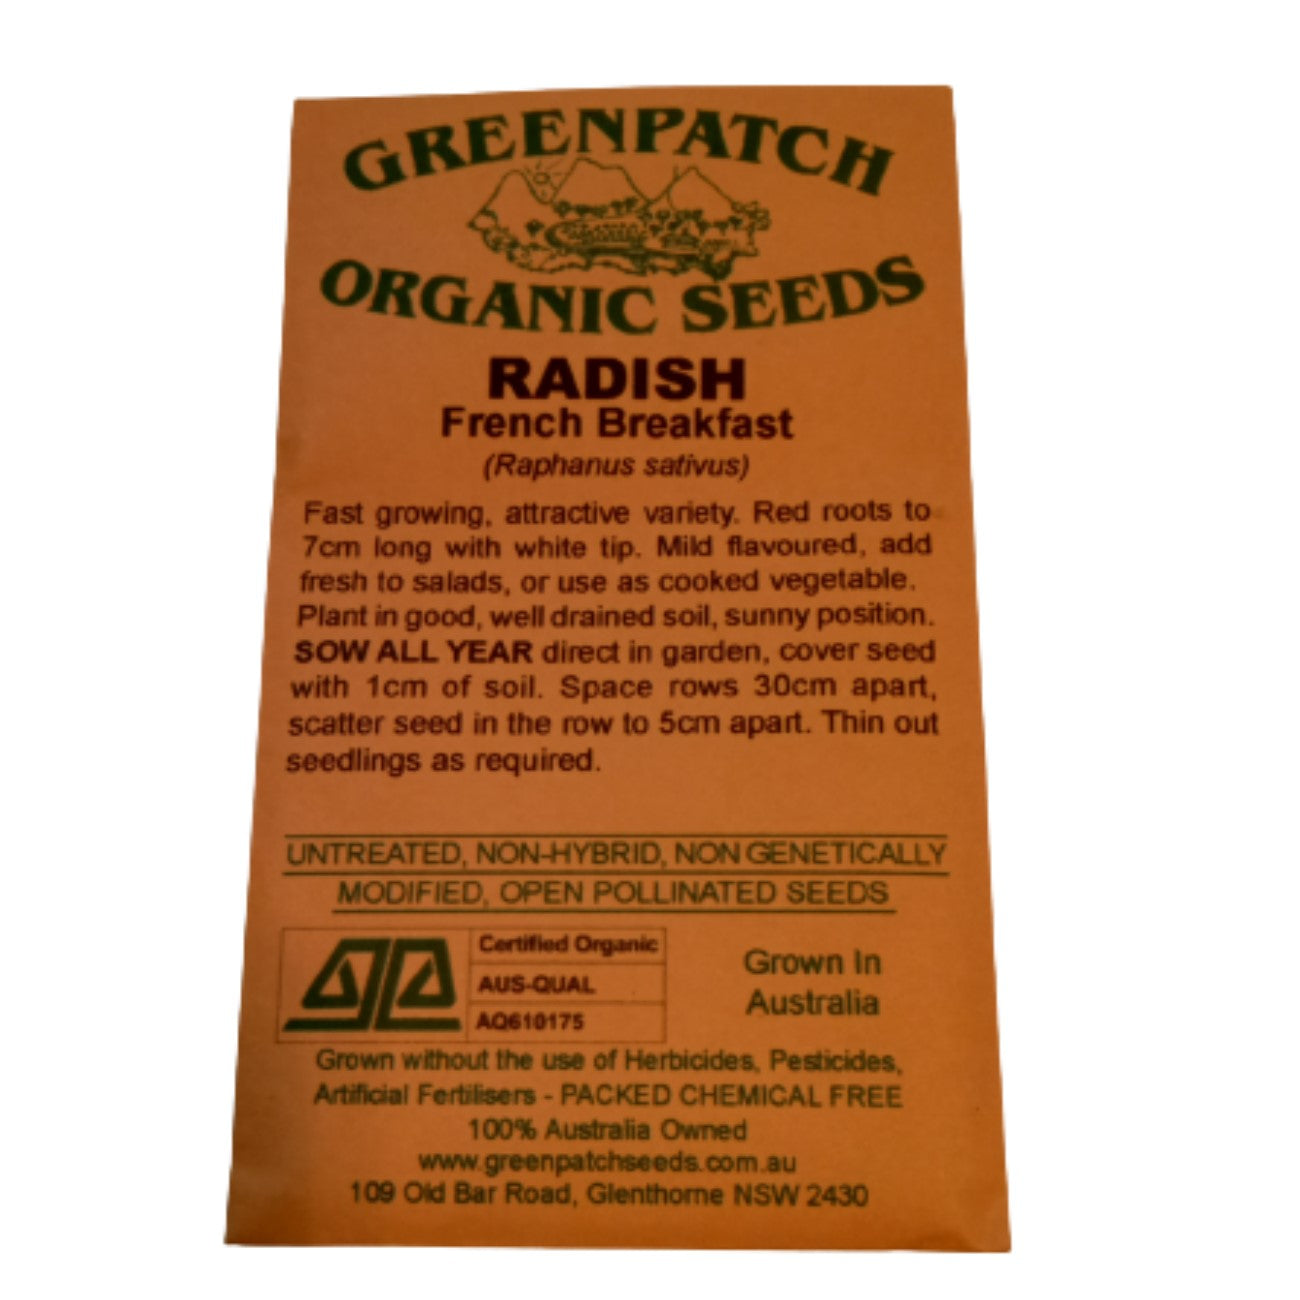 Certified Organic Radish Seed. Shop certified organic and heirloom vegetable seeds now.